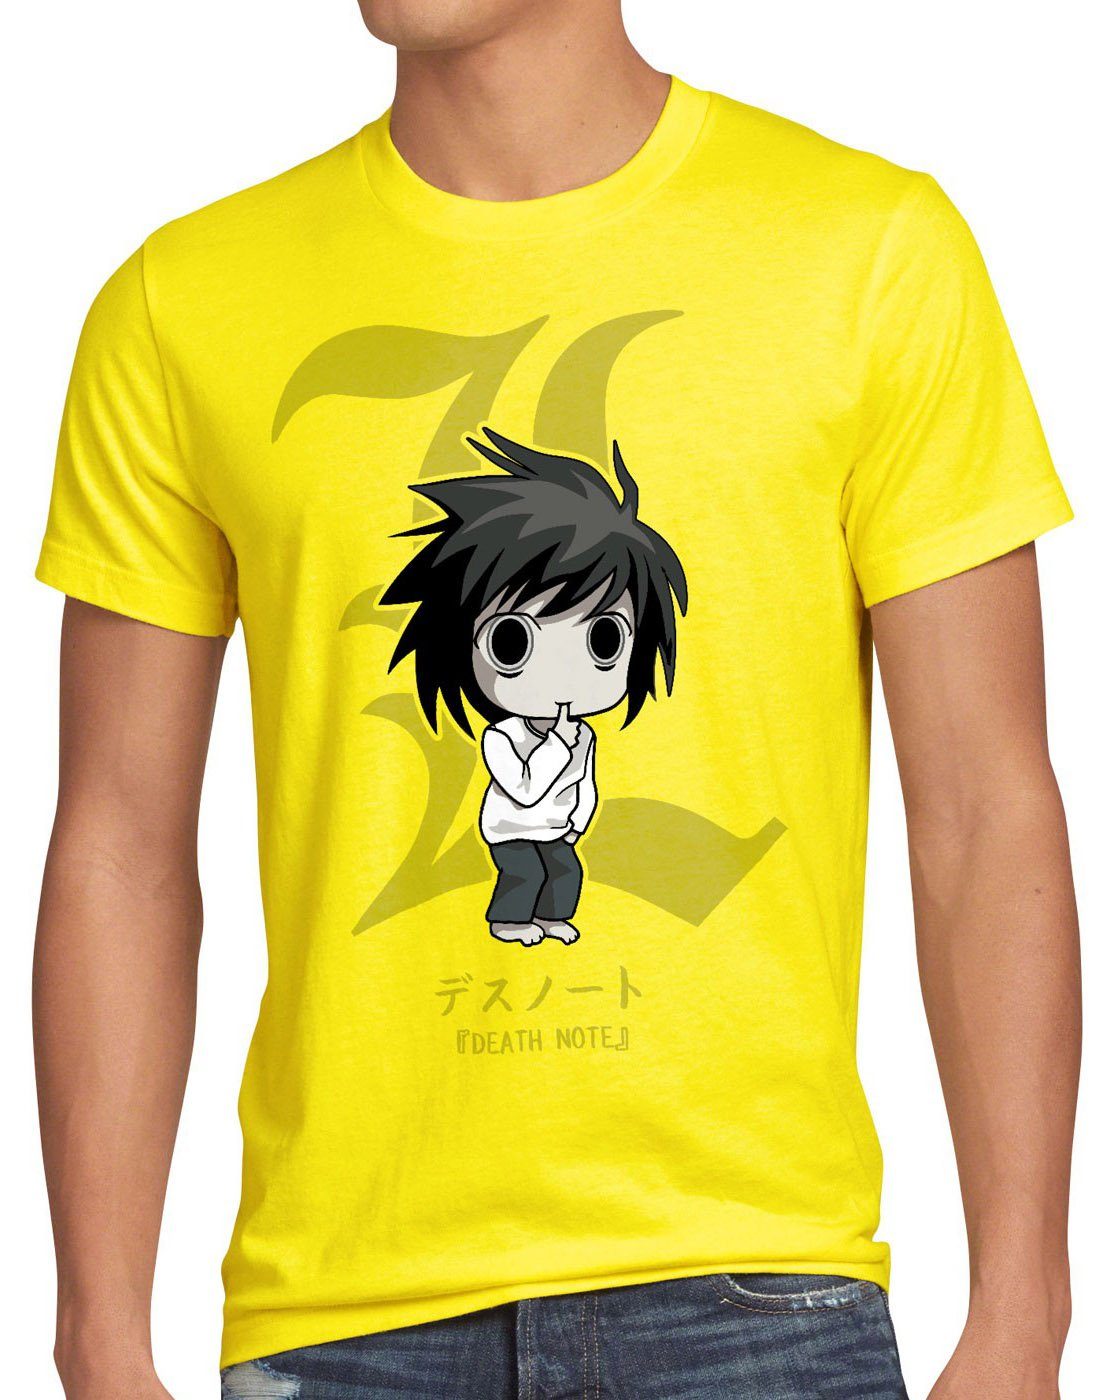 style3 Print-Shirt Herren T-Shirt L Kira note notizbuch anime manga yagami death shinigami gelb